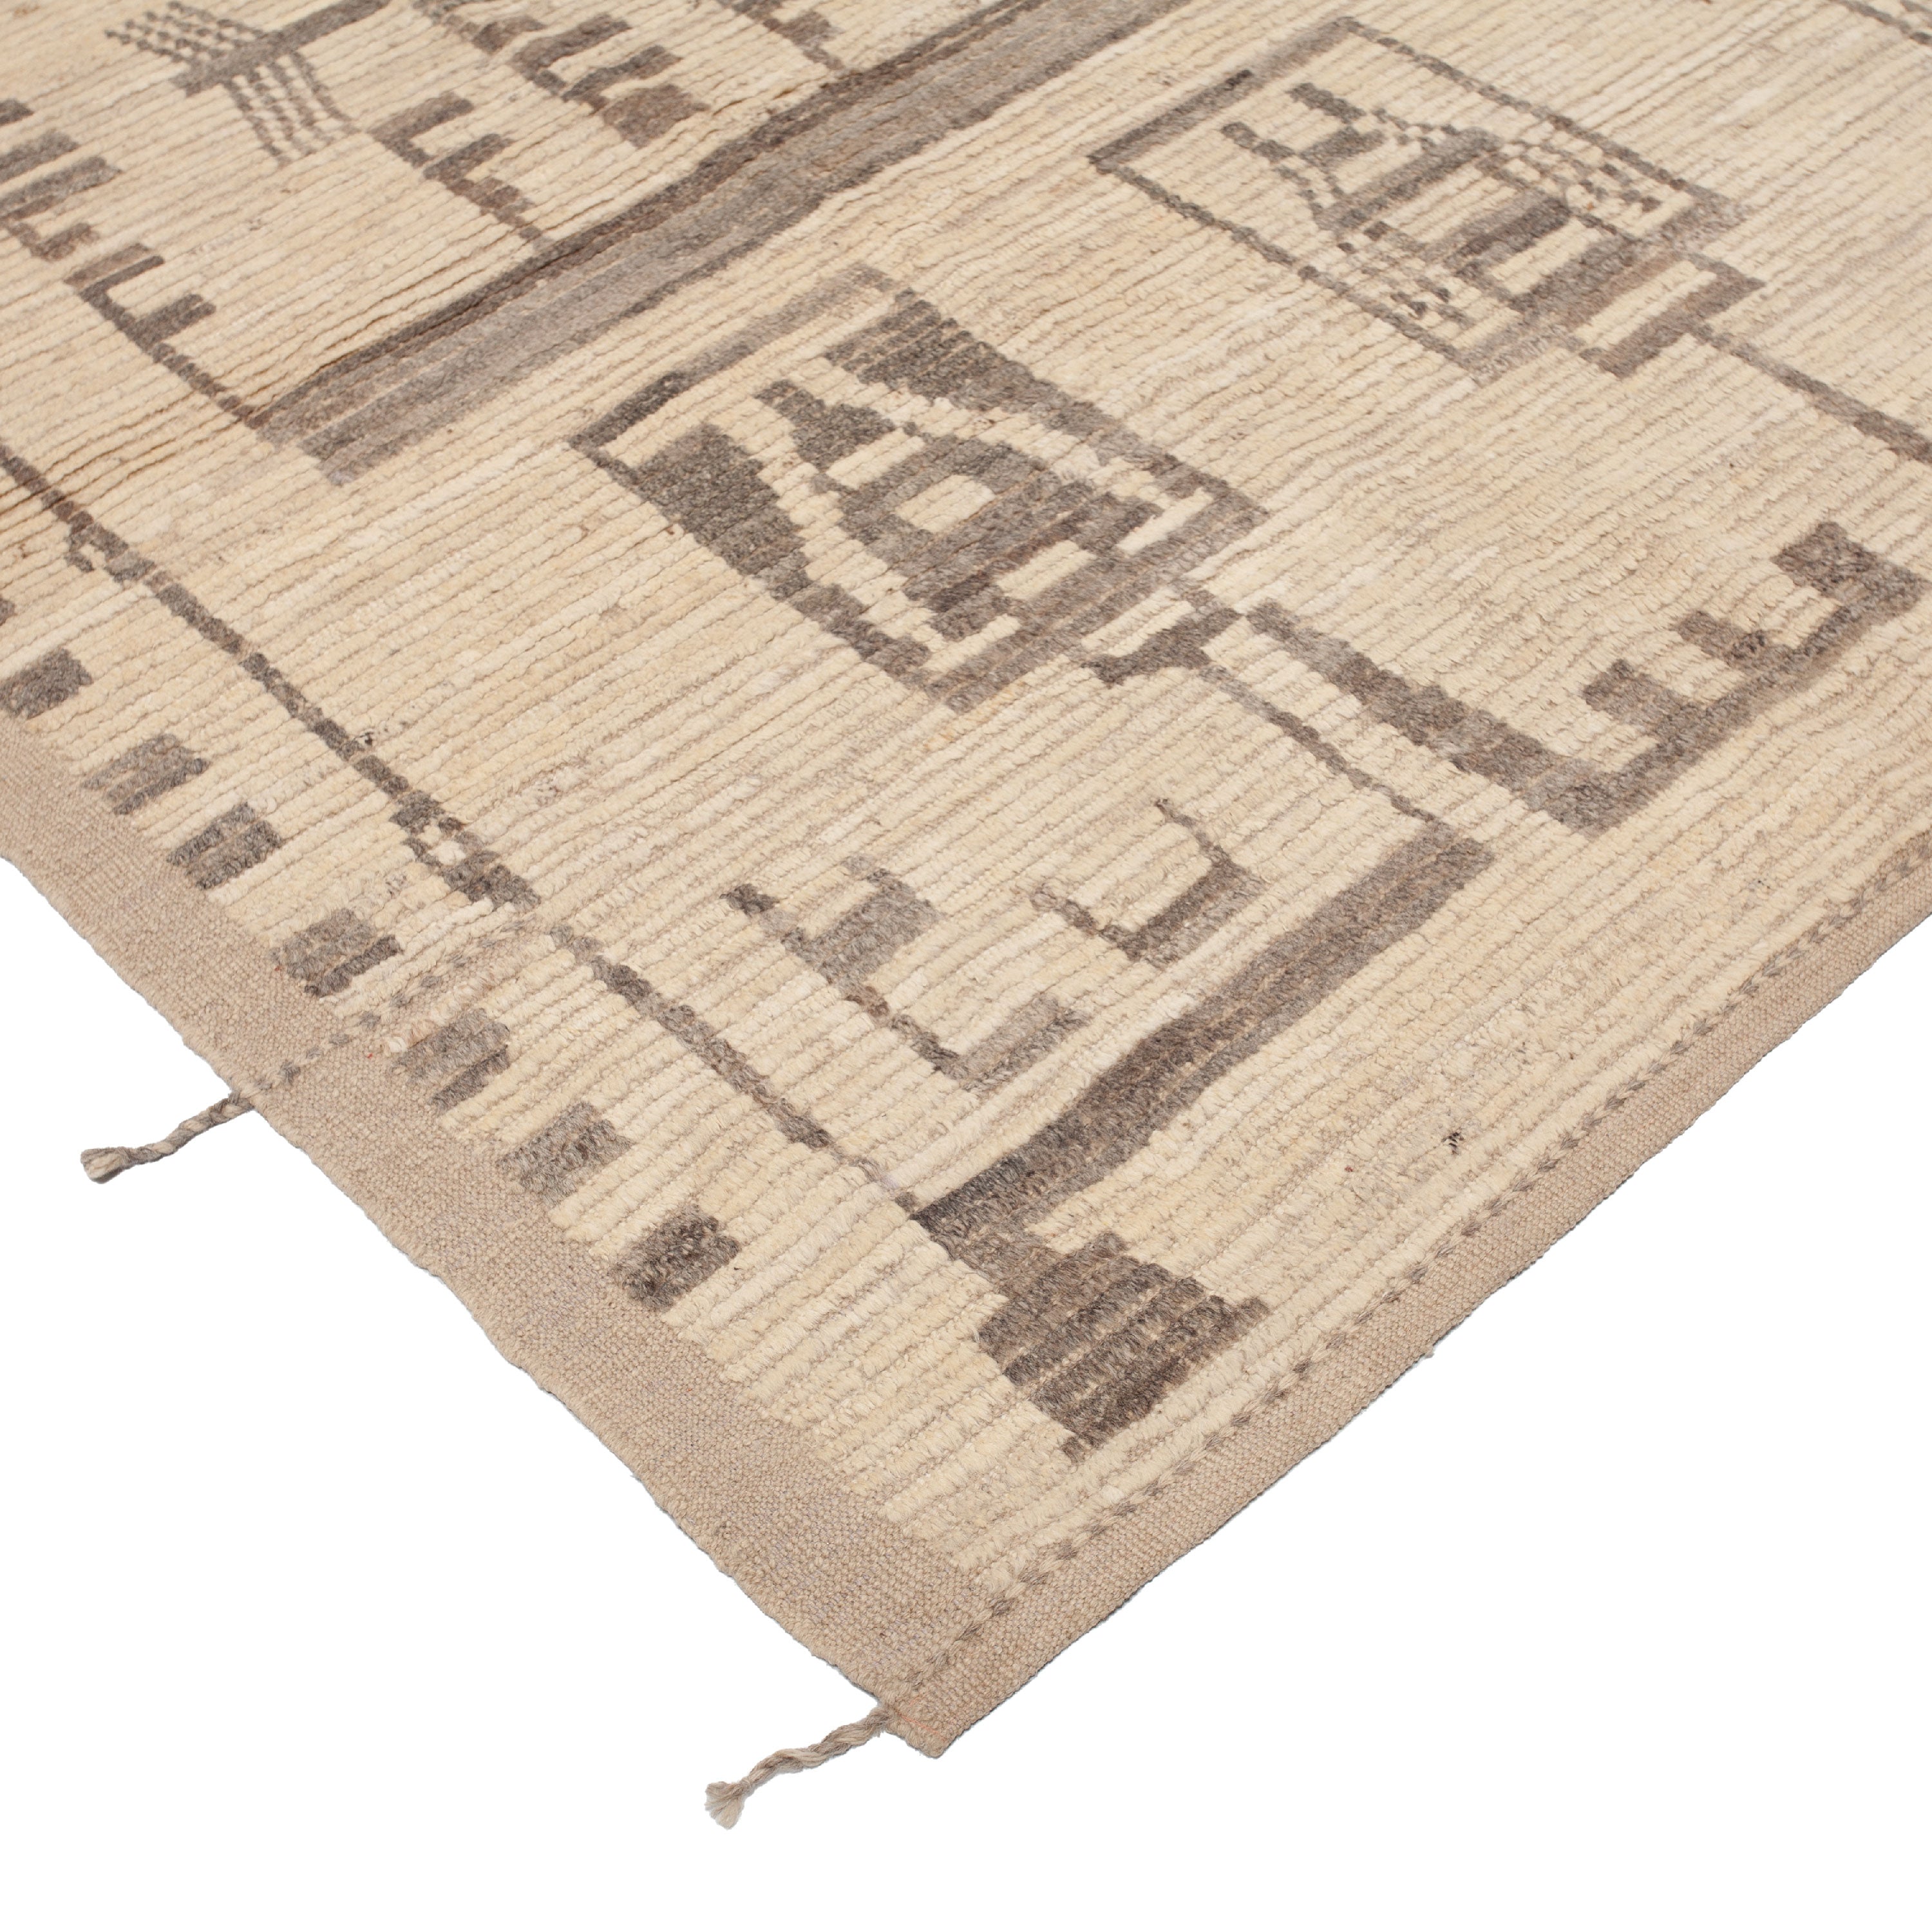 Zameen Patterned Modern Wool Rug - 11' x 14' Default Title